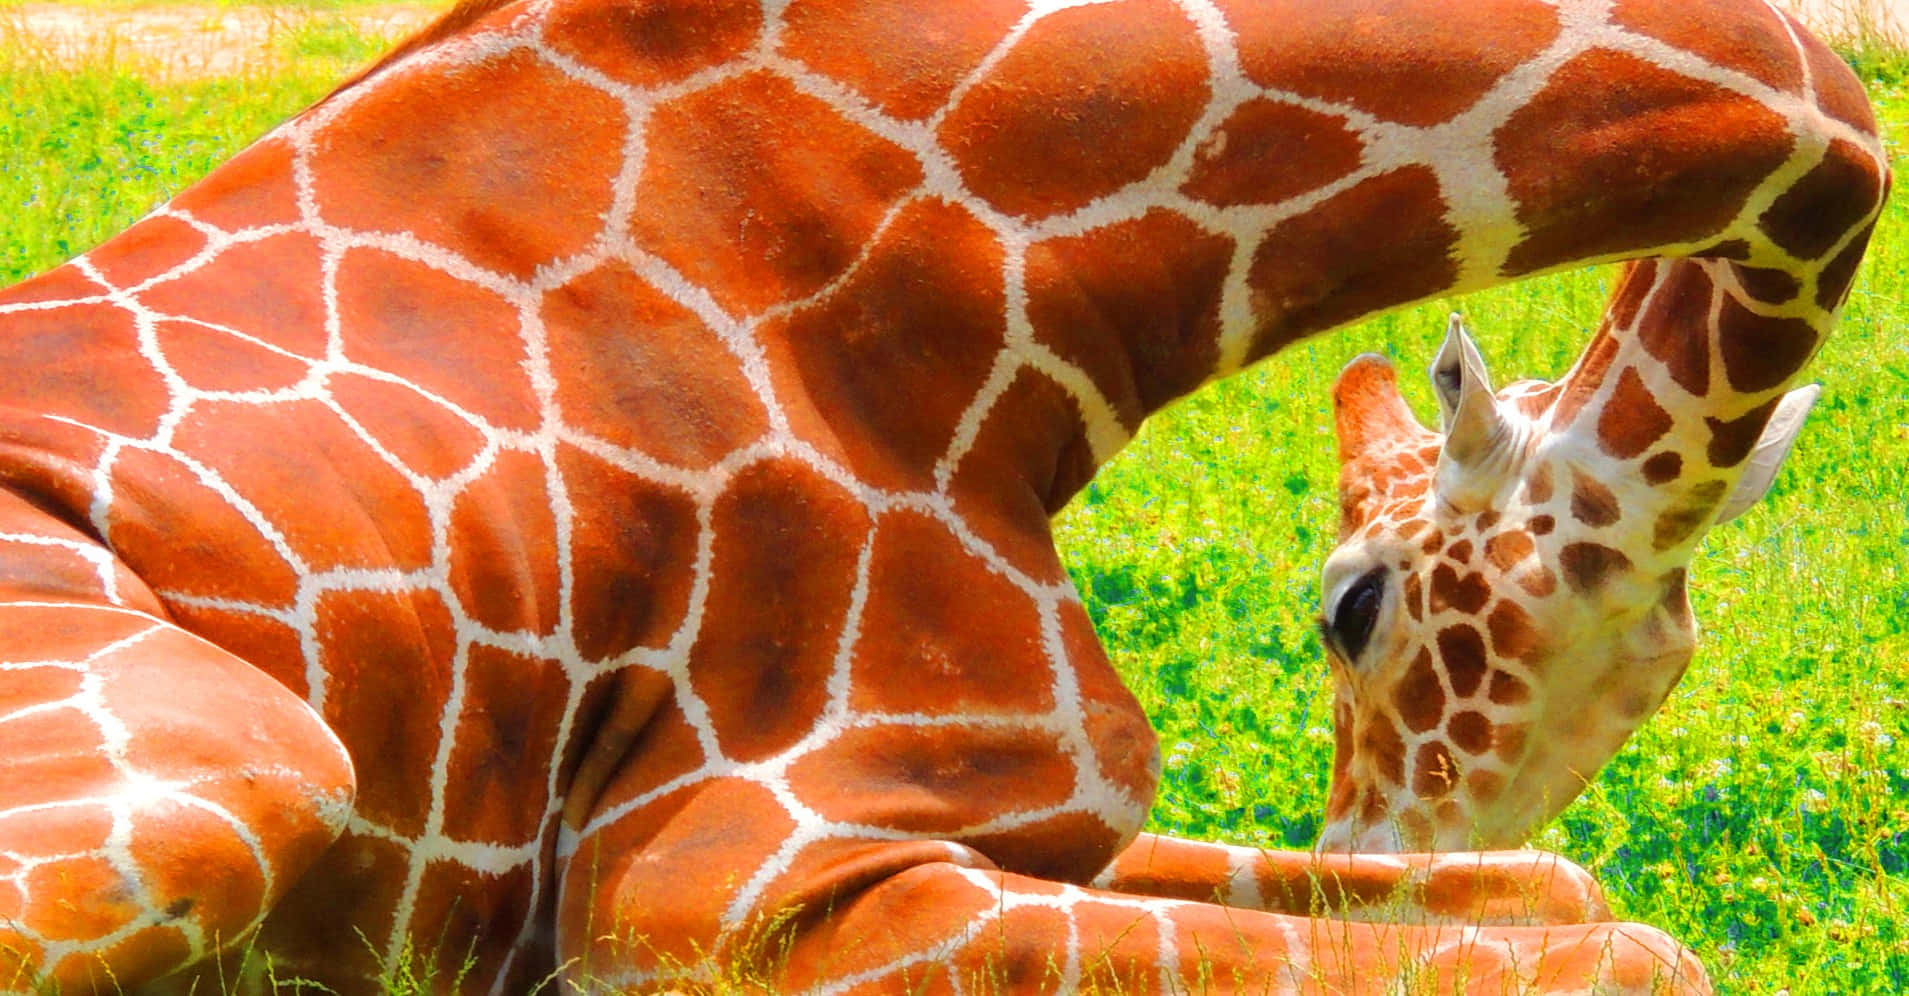 A towering giraffe in its natural environment